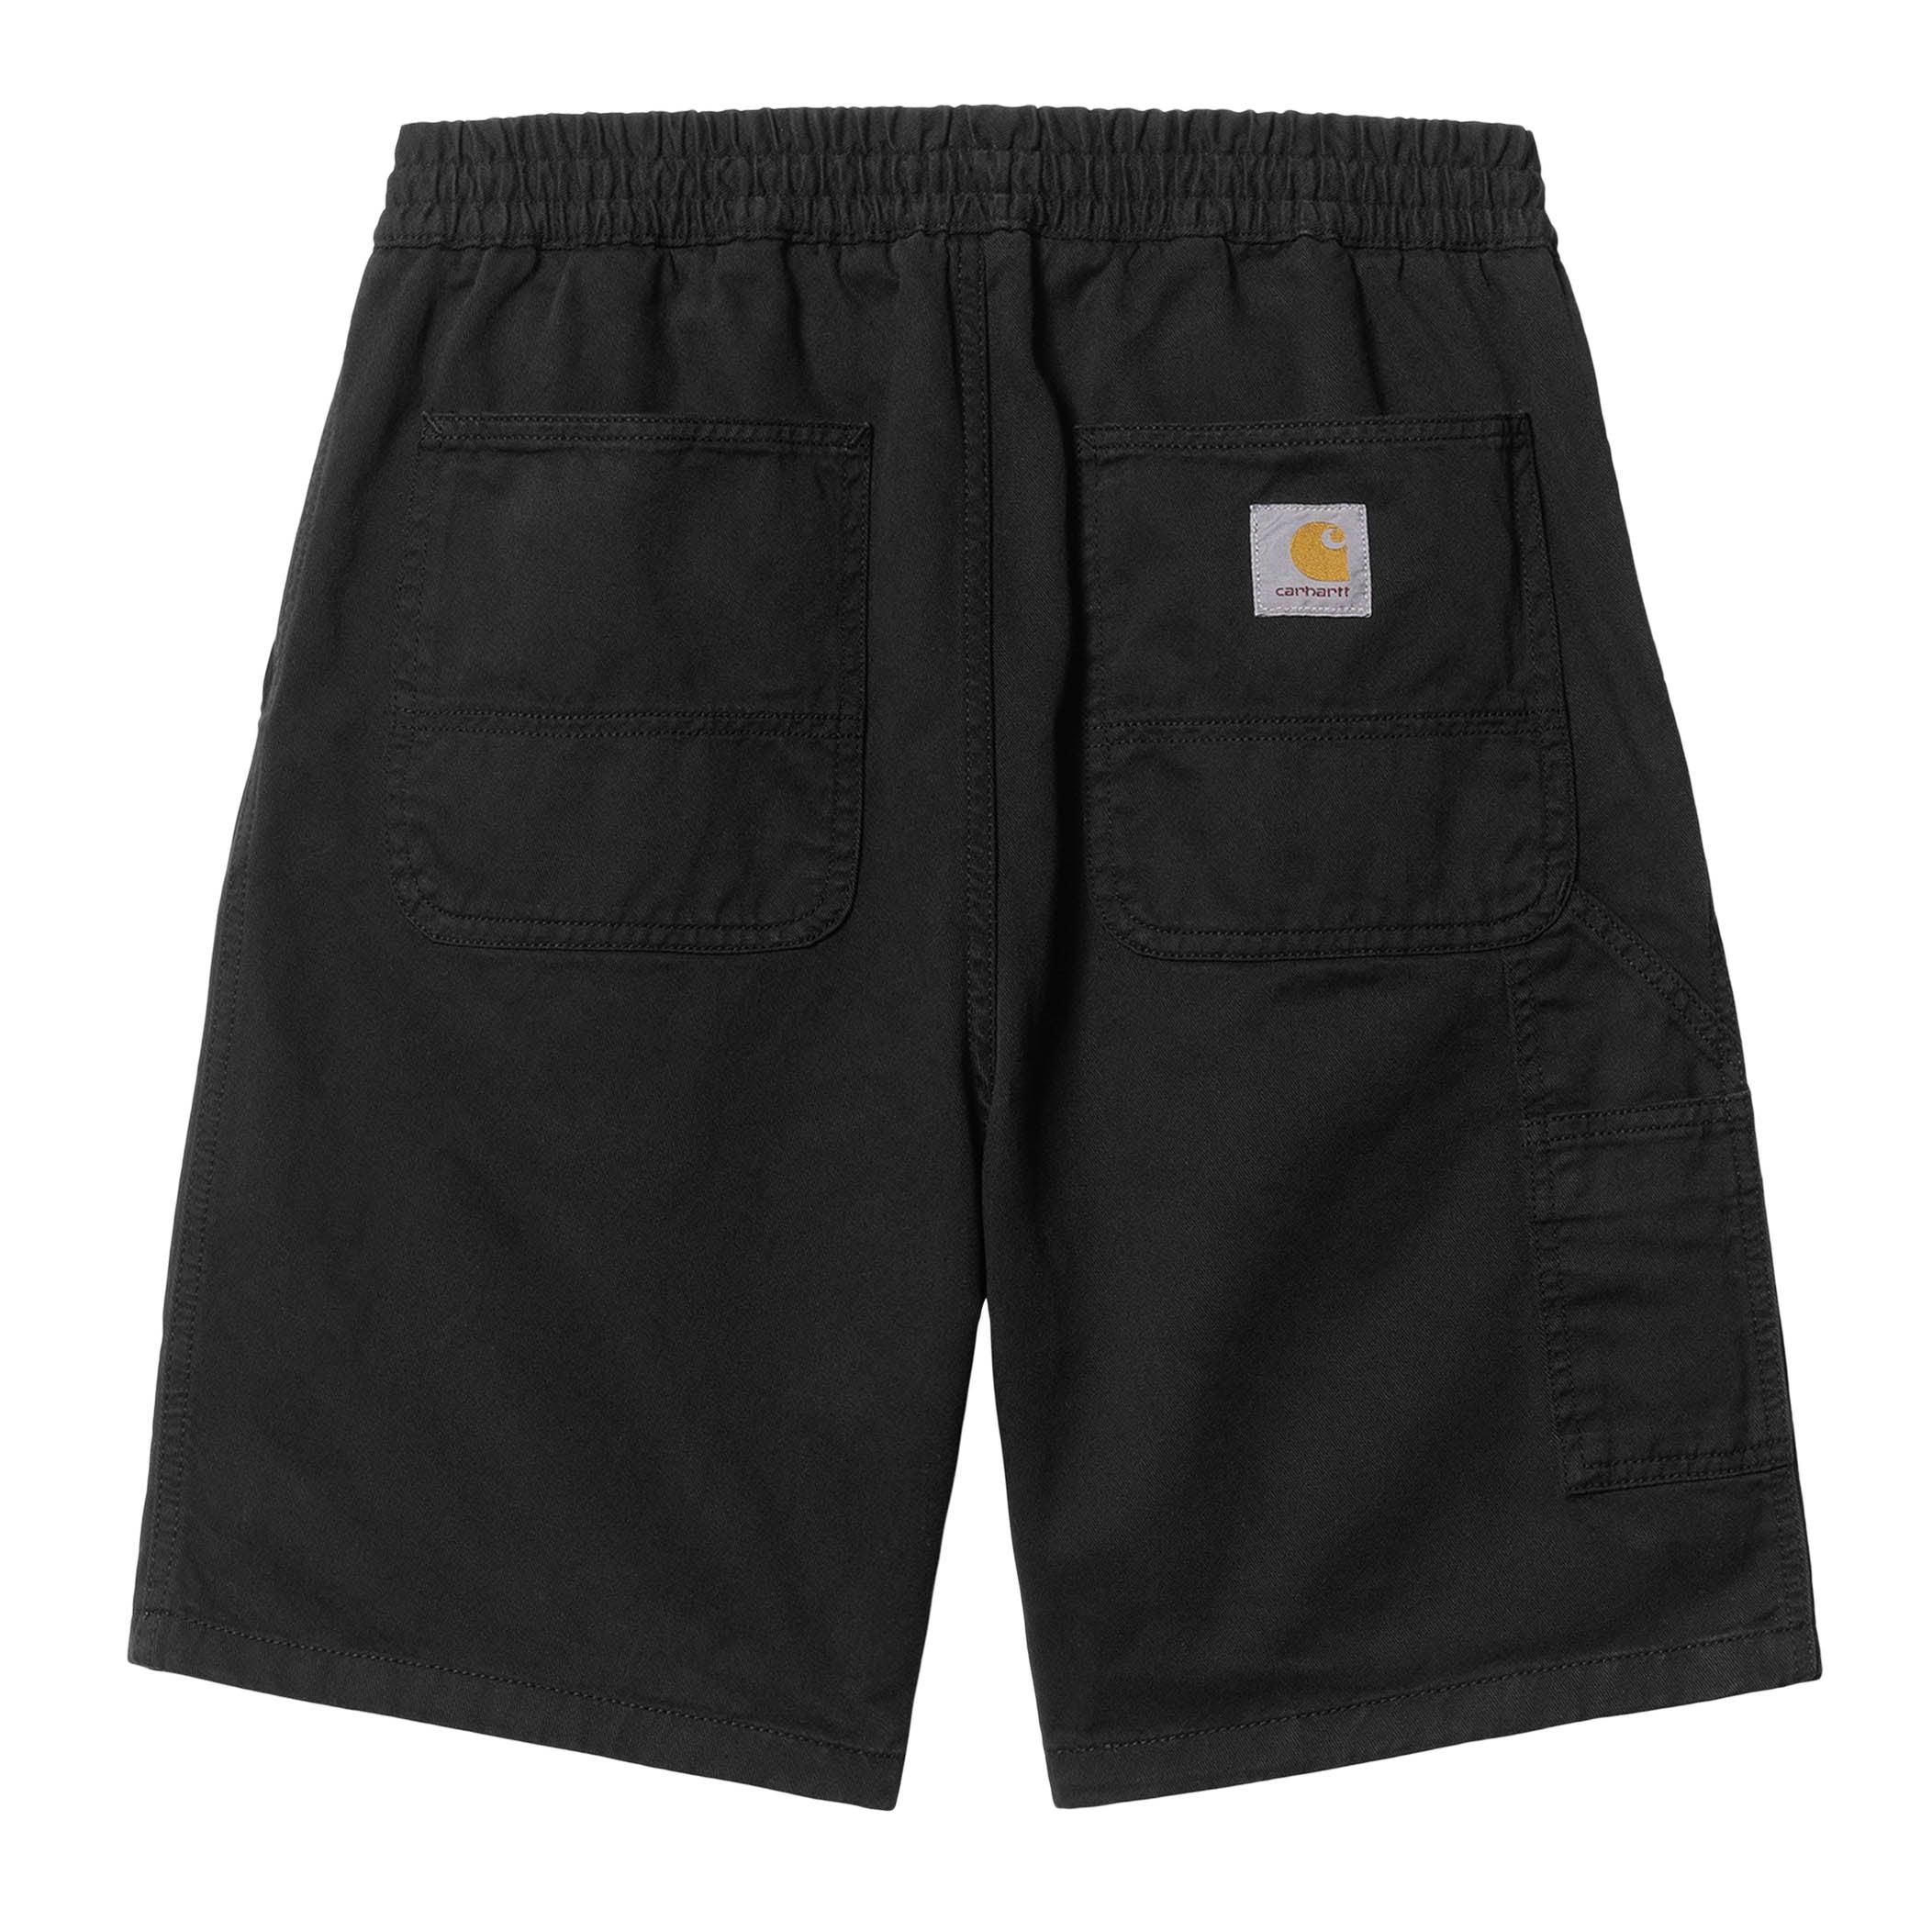 Carhartt WIP Cotton Flint Shorts in Black for Men - Save 37% | Lyst